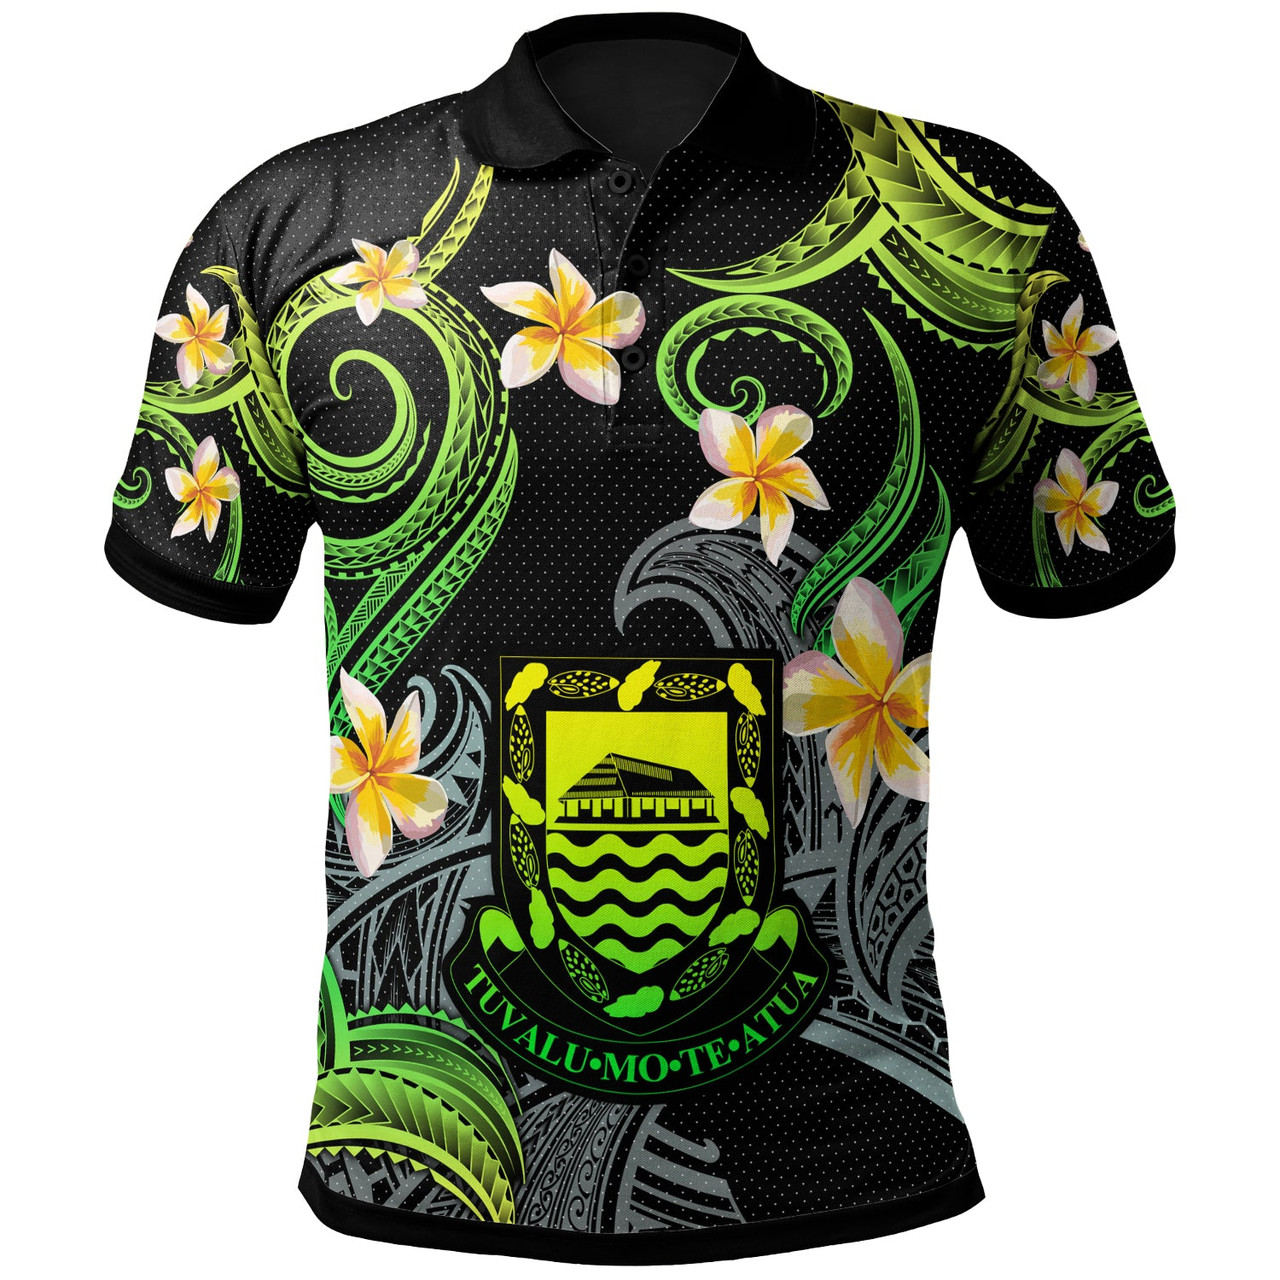 Tuvalu Polo Shirt - Custom Personalised Polynesian Waves with Plumeria Flowers (Green)